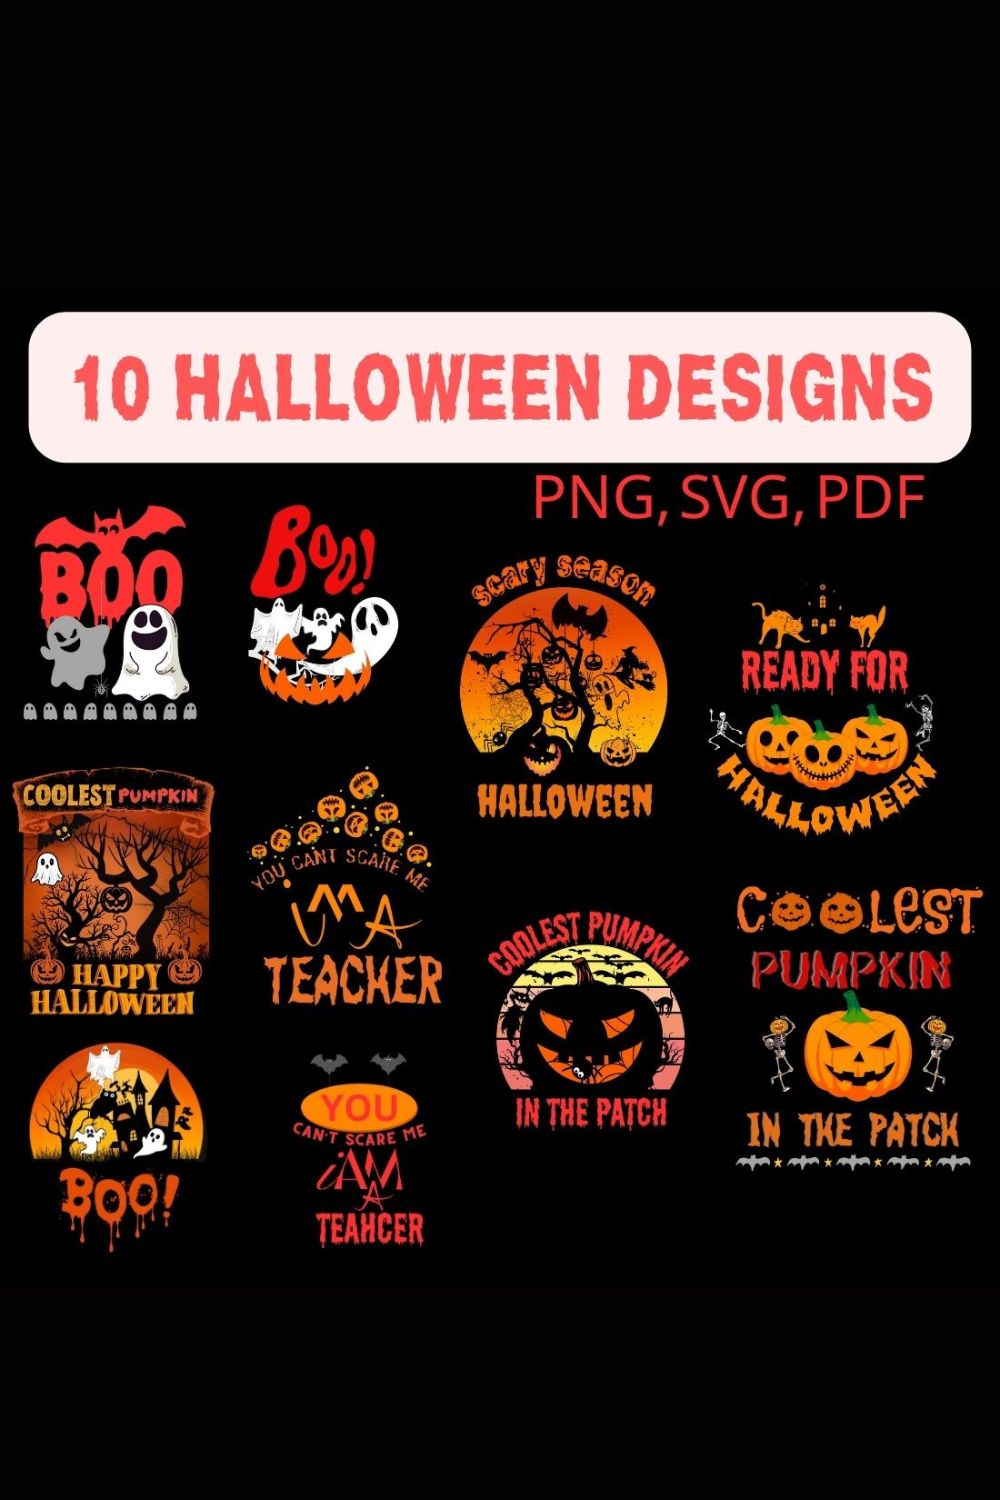 10 Halloween Design pinterest preview image.